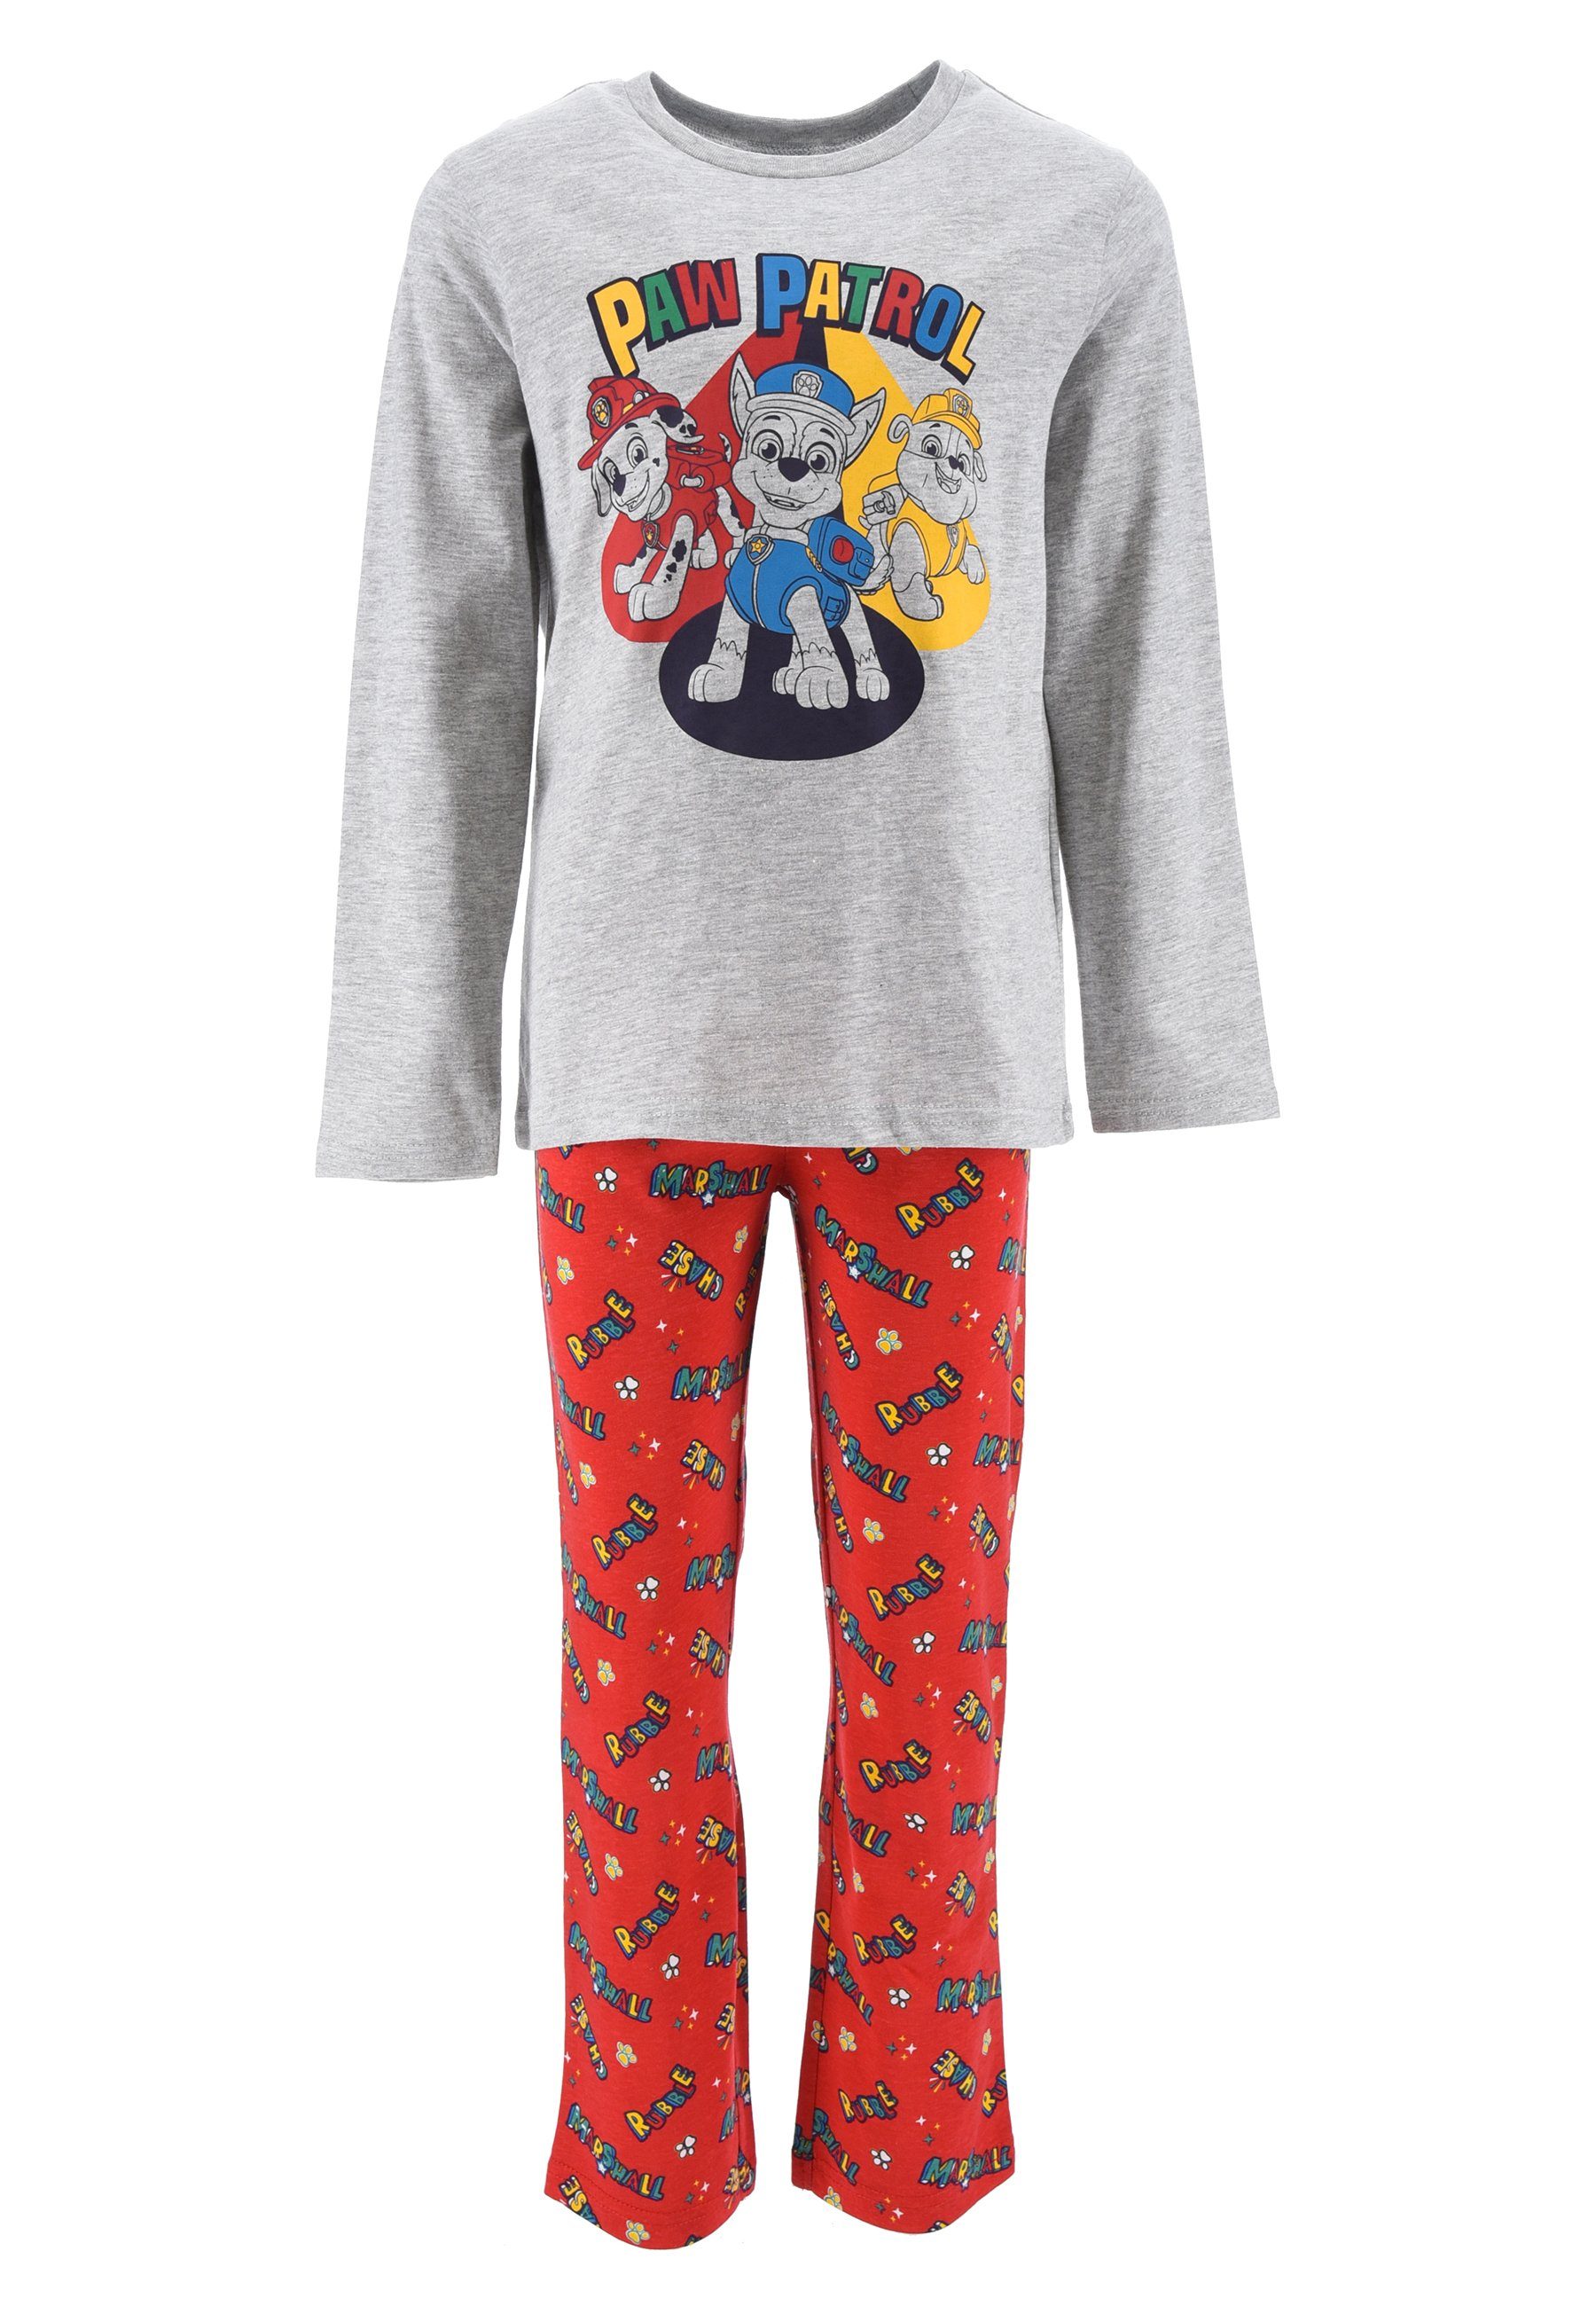 PAW PATROL Schlafanzug Chase Marshall Rubble Kinder Jungen Pyjama langarm Nachtwäsche (2 tlg) Grau